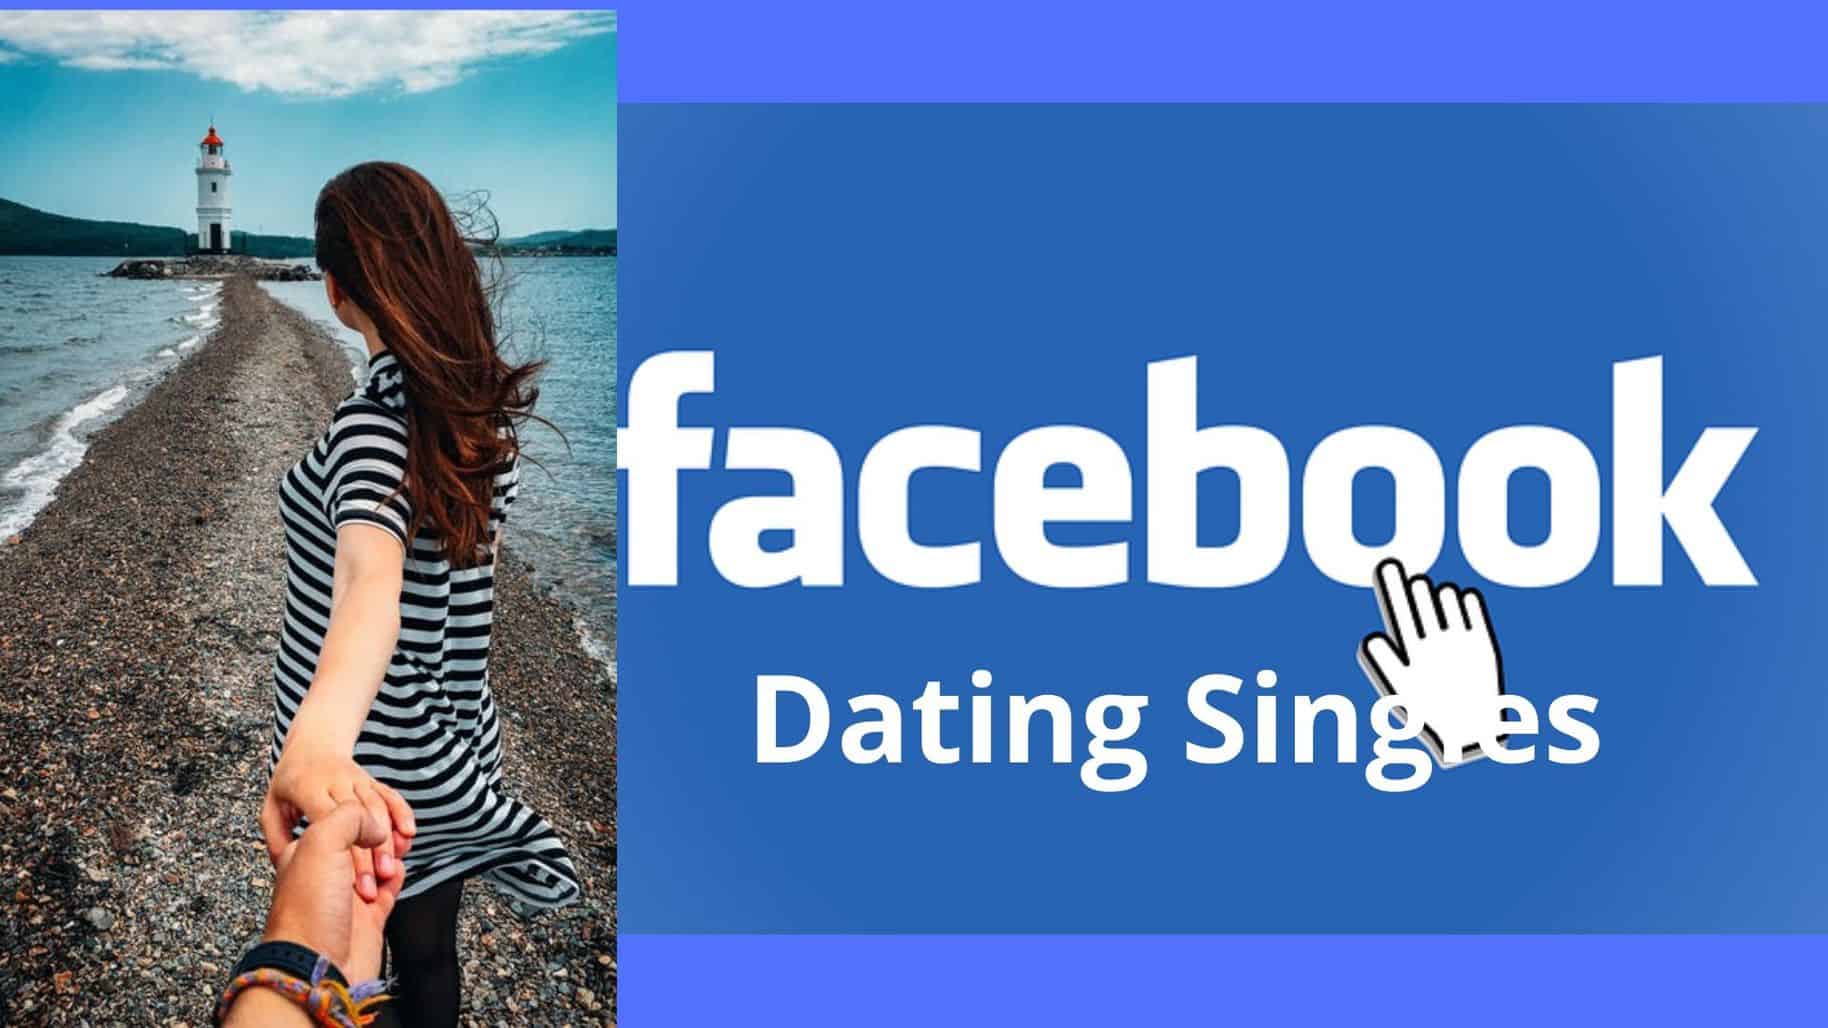 Facebook Dating Singles - Date Singles Facebook | Facebook ...